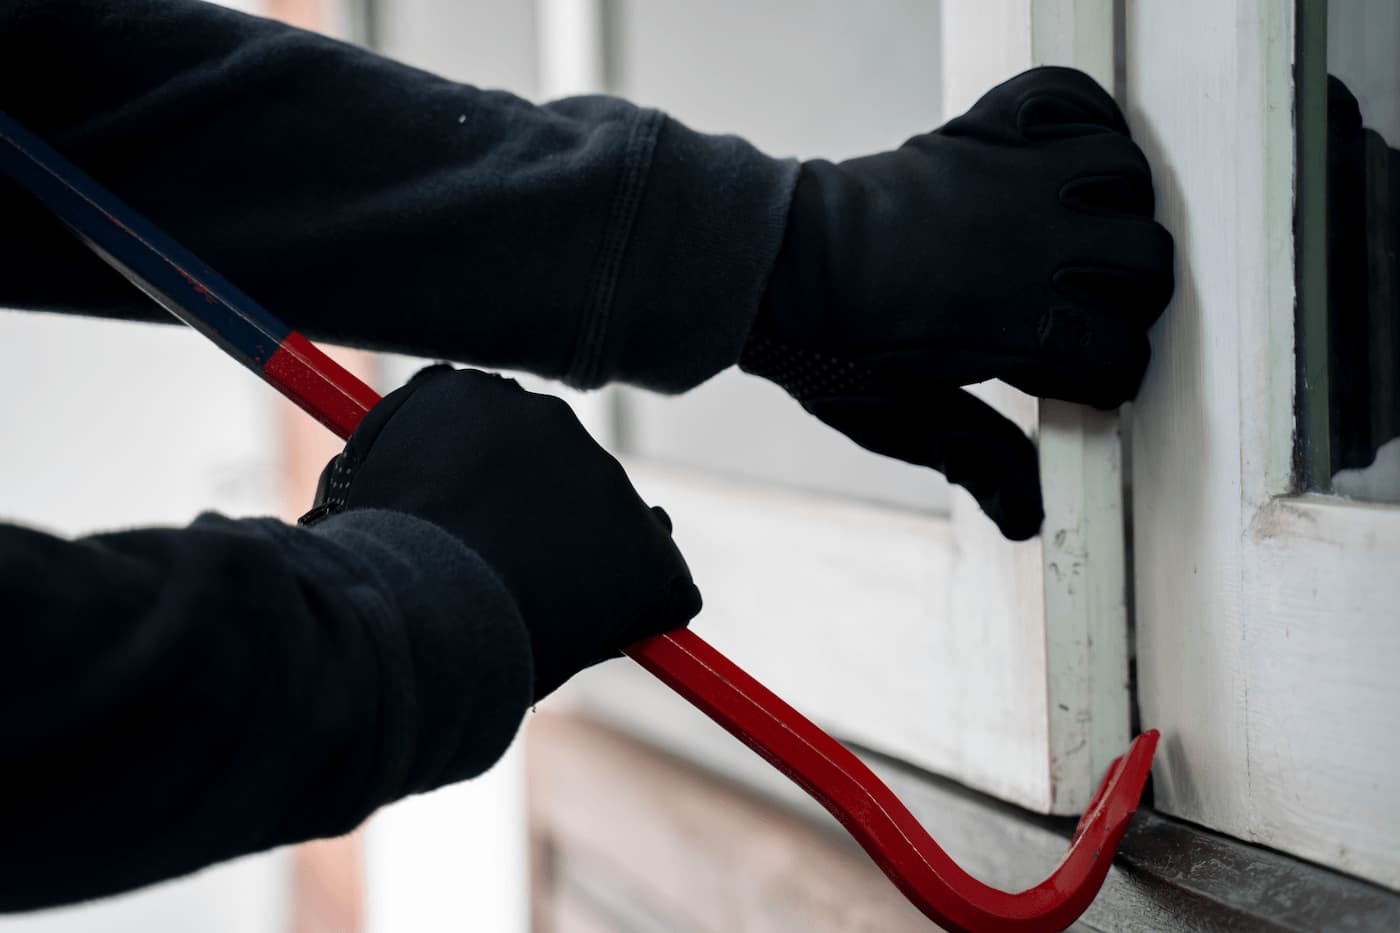 Example of a burglar trying to break in